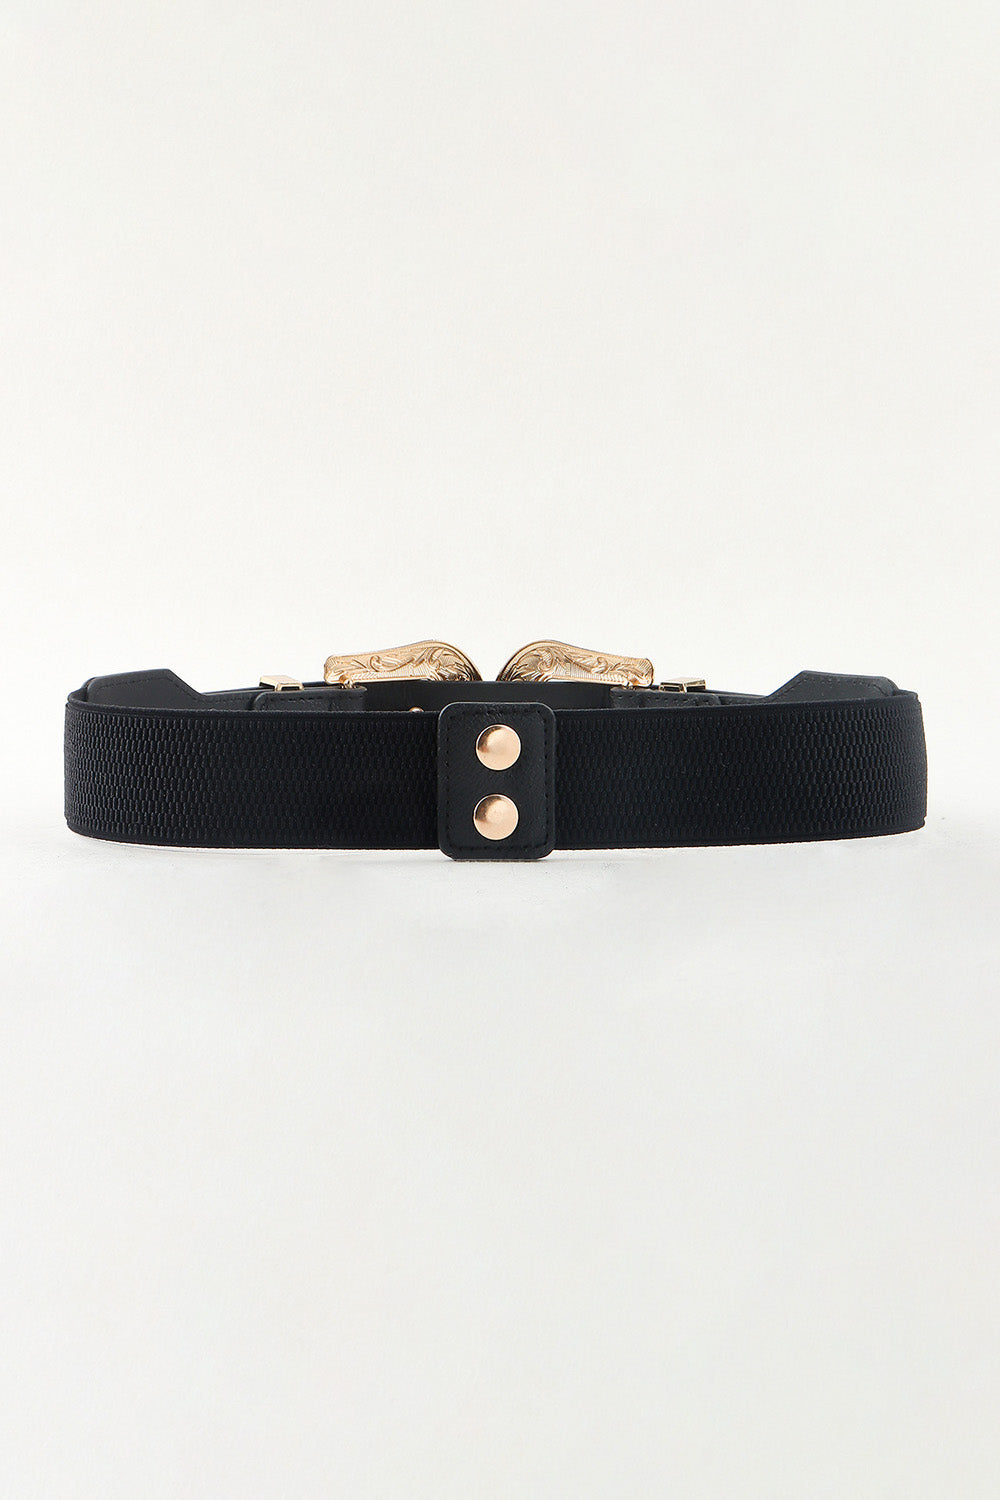 Symmetrical Zinc Alloy Buckle PU Western Leather Belt